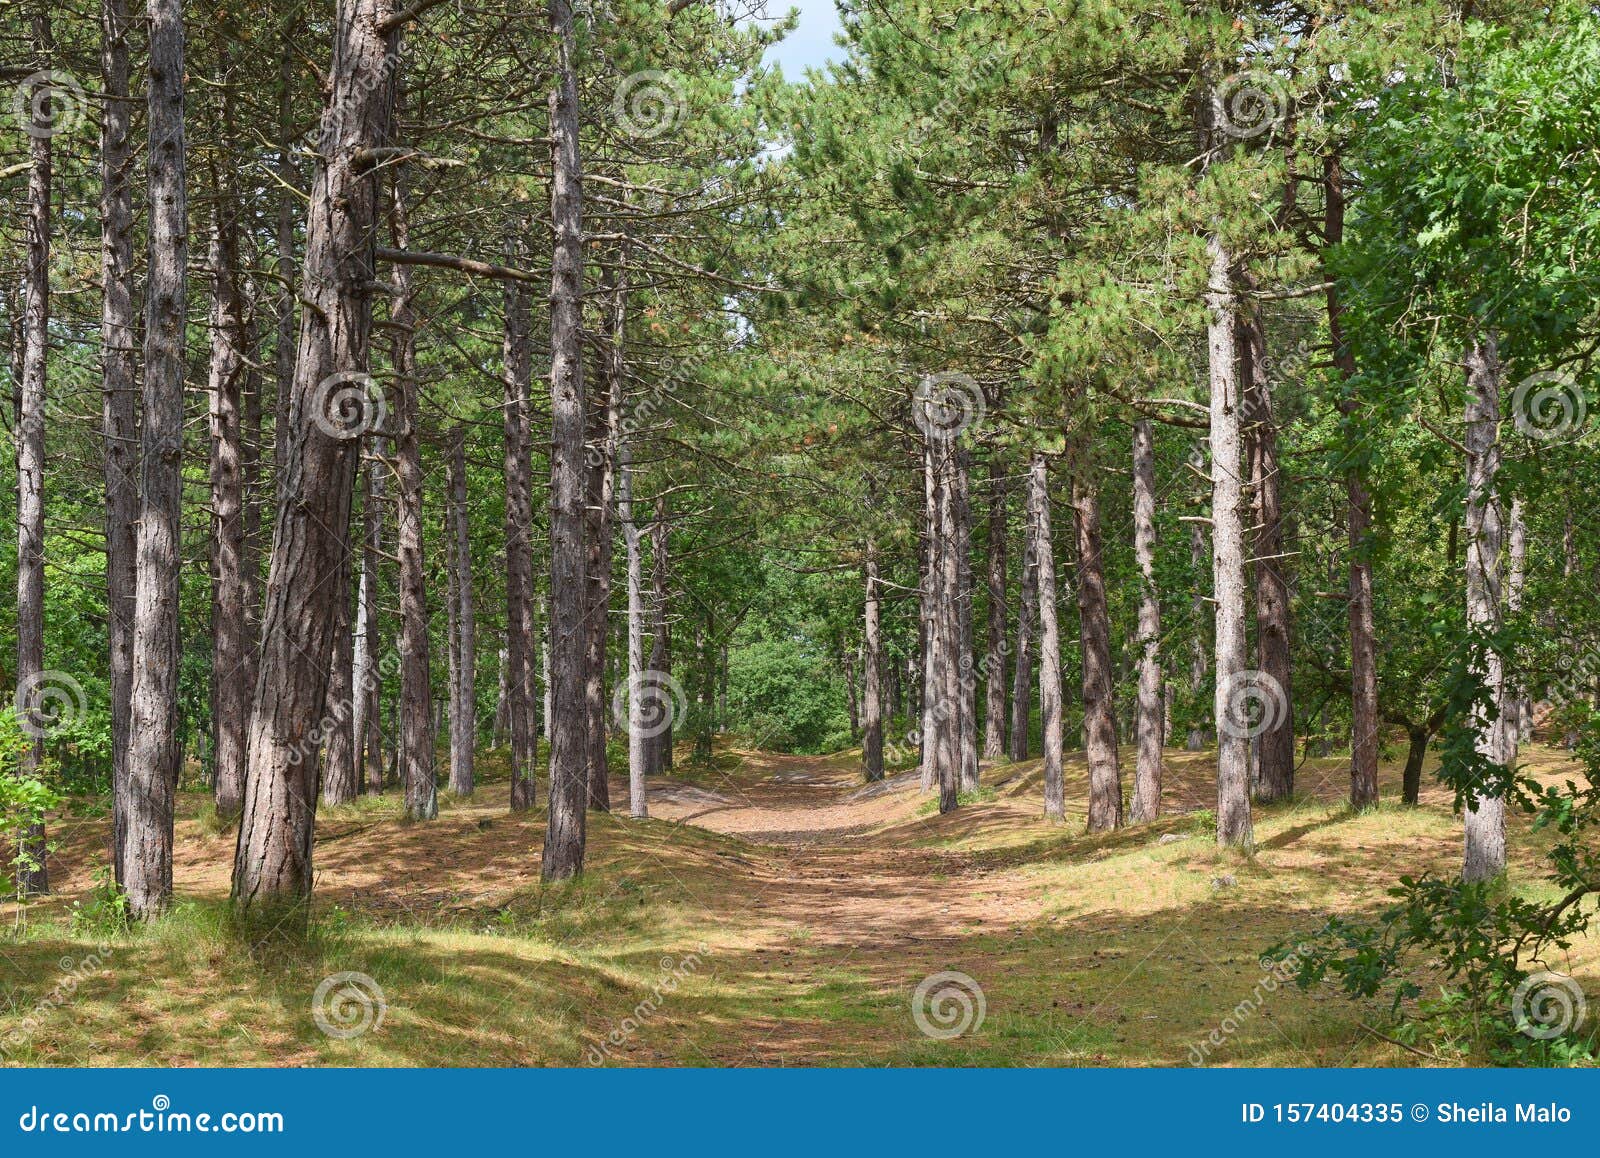 forest of pines in summer in vlieland, netherlands.